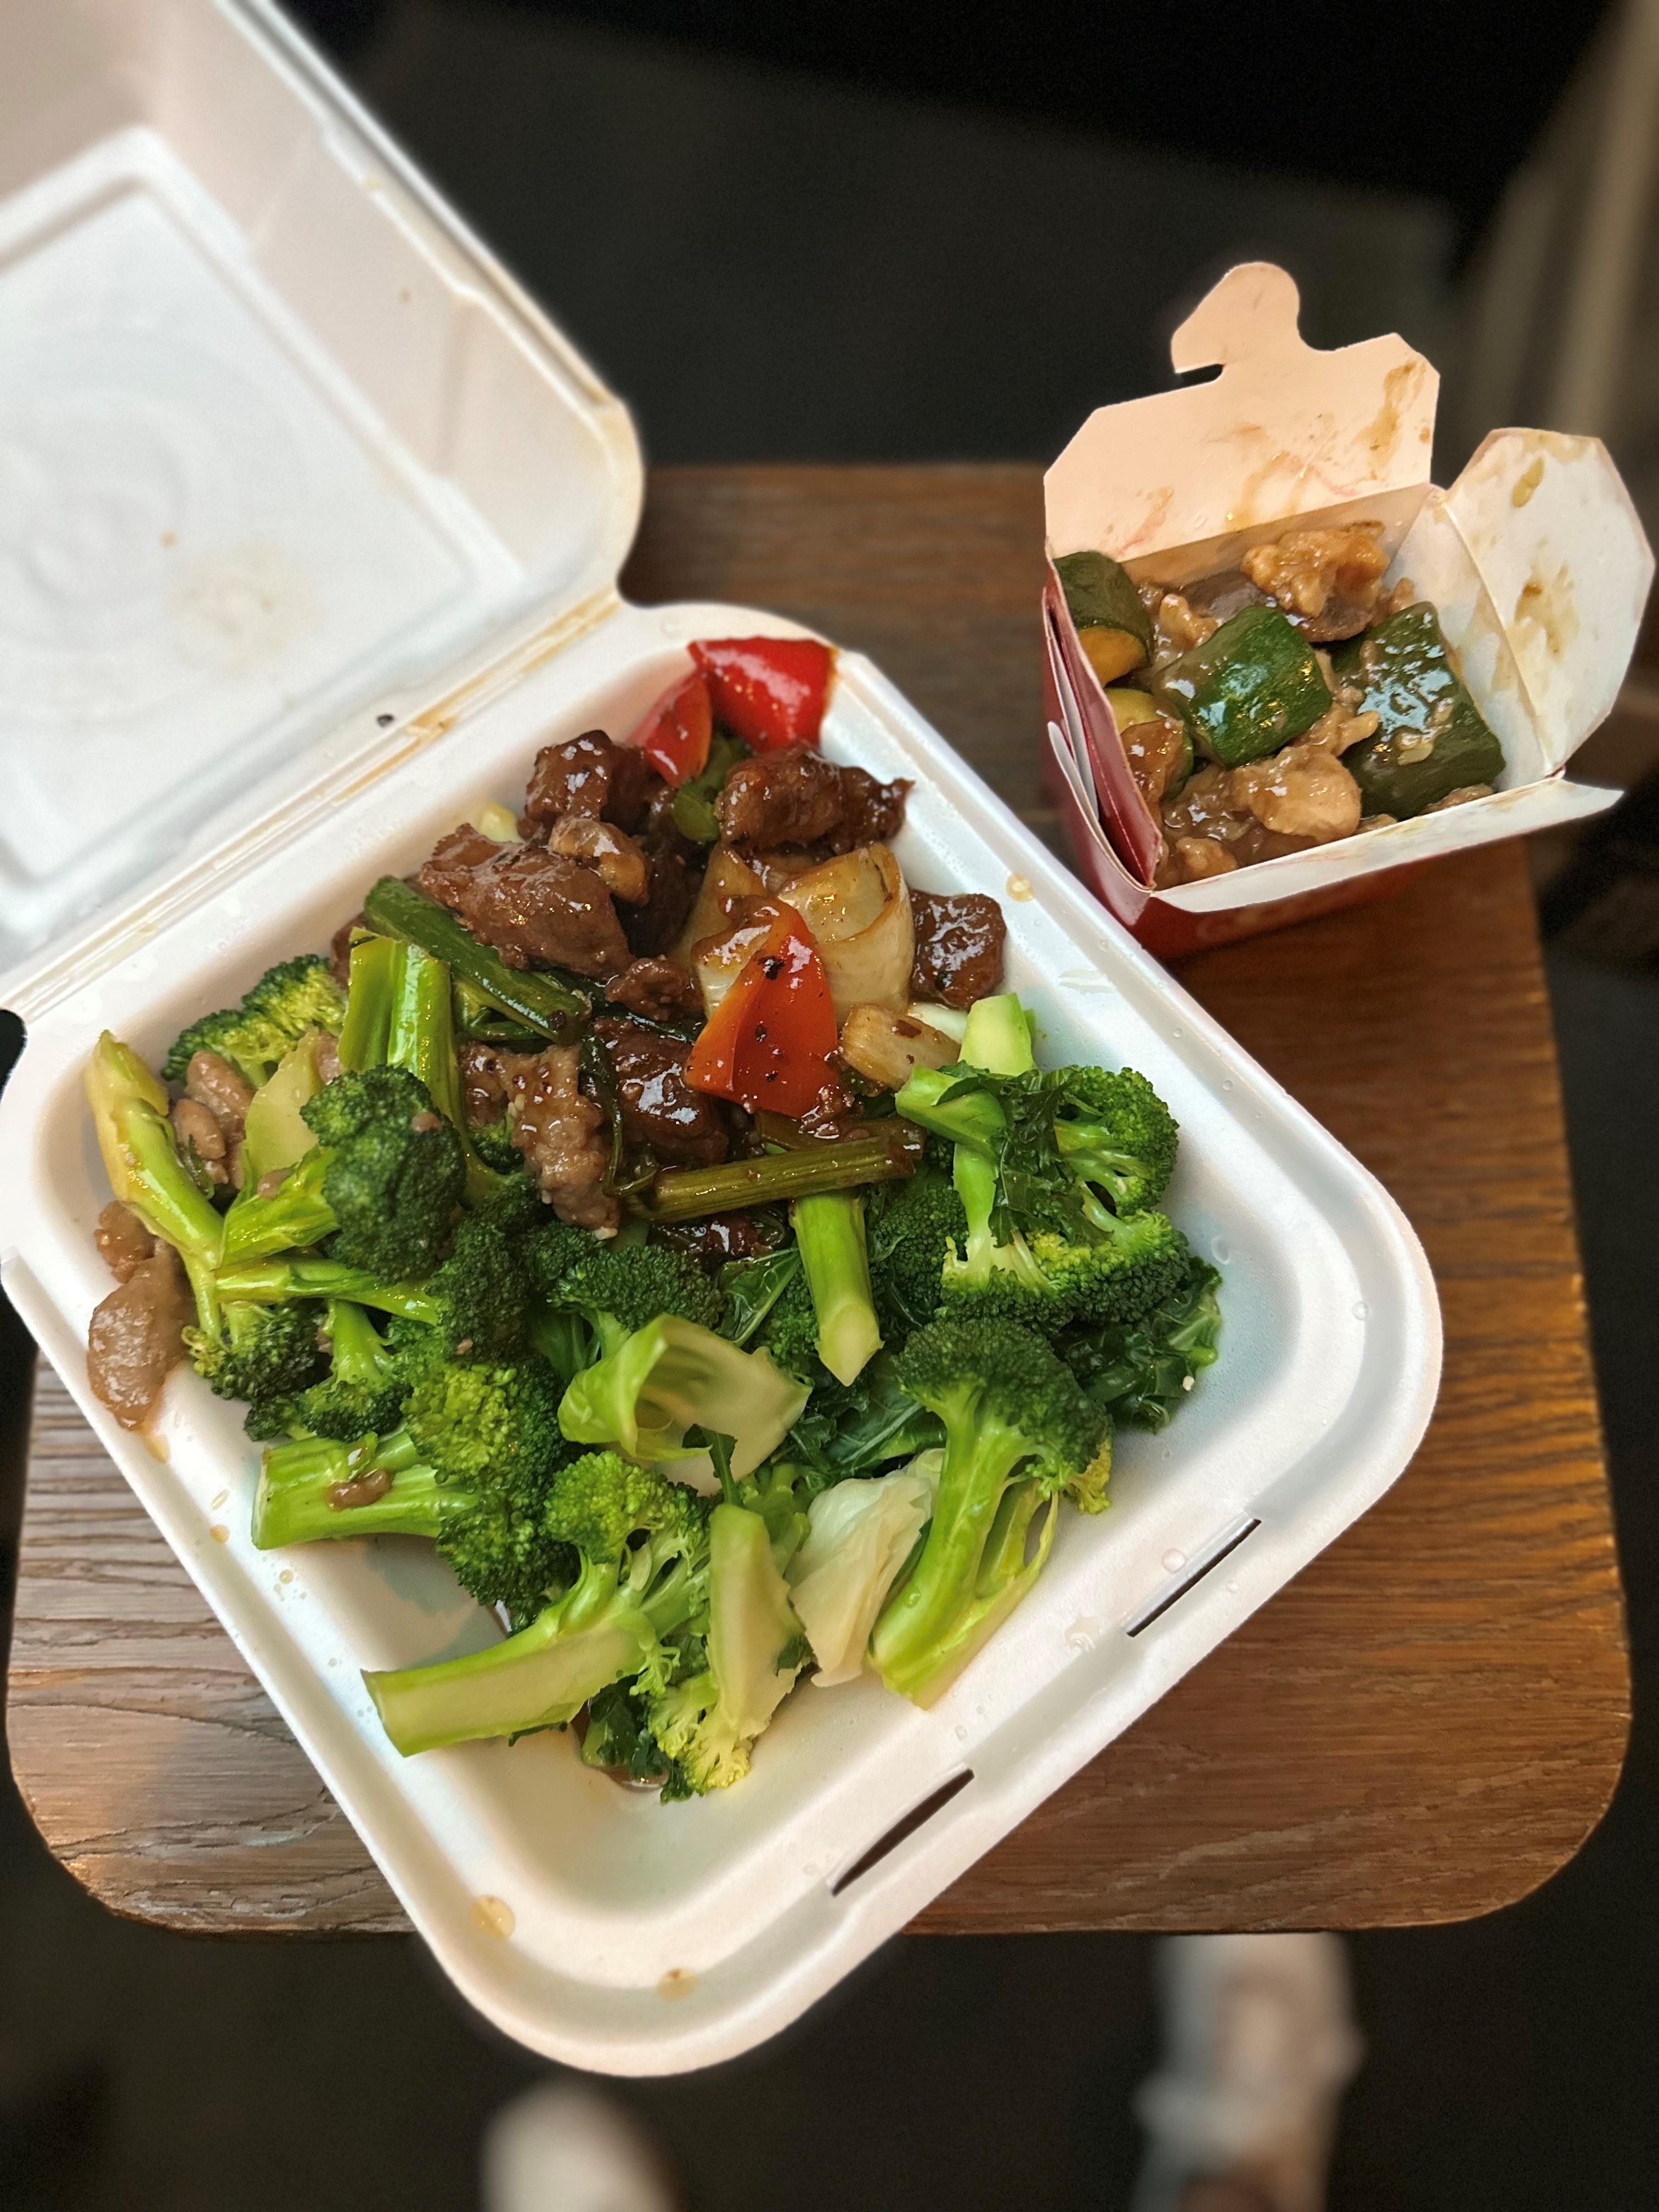 Broccoli beef and side of broccoli (left); Mushroom chicken (right)